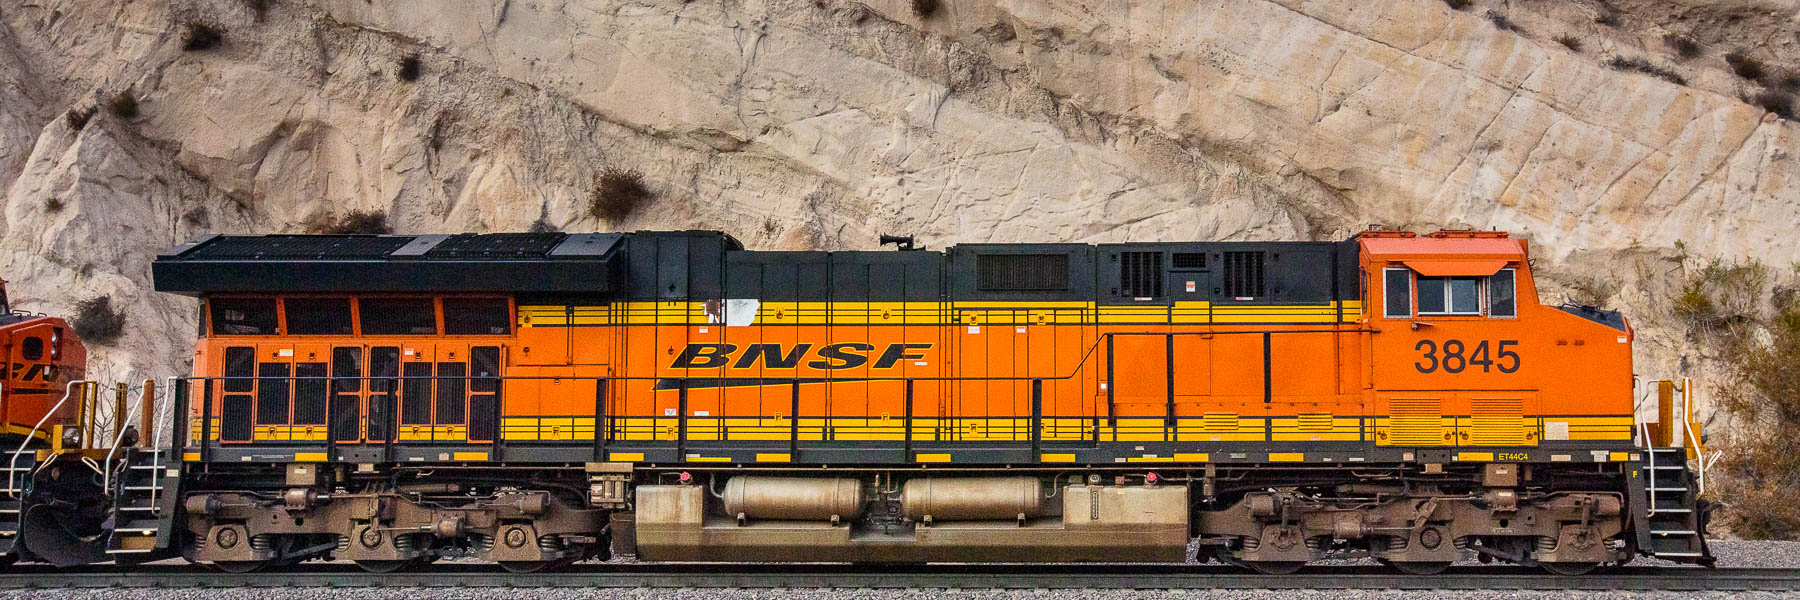 Locomotive BNSF 3845